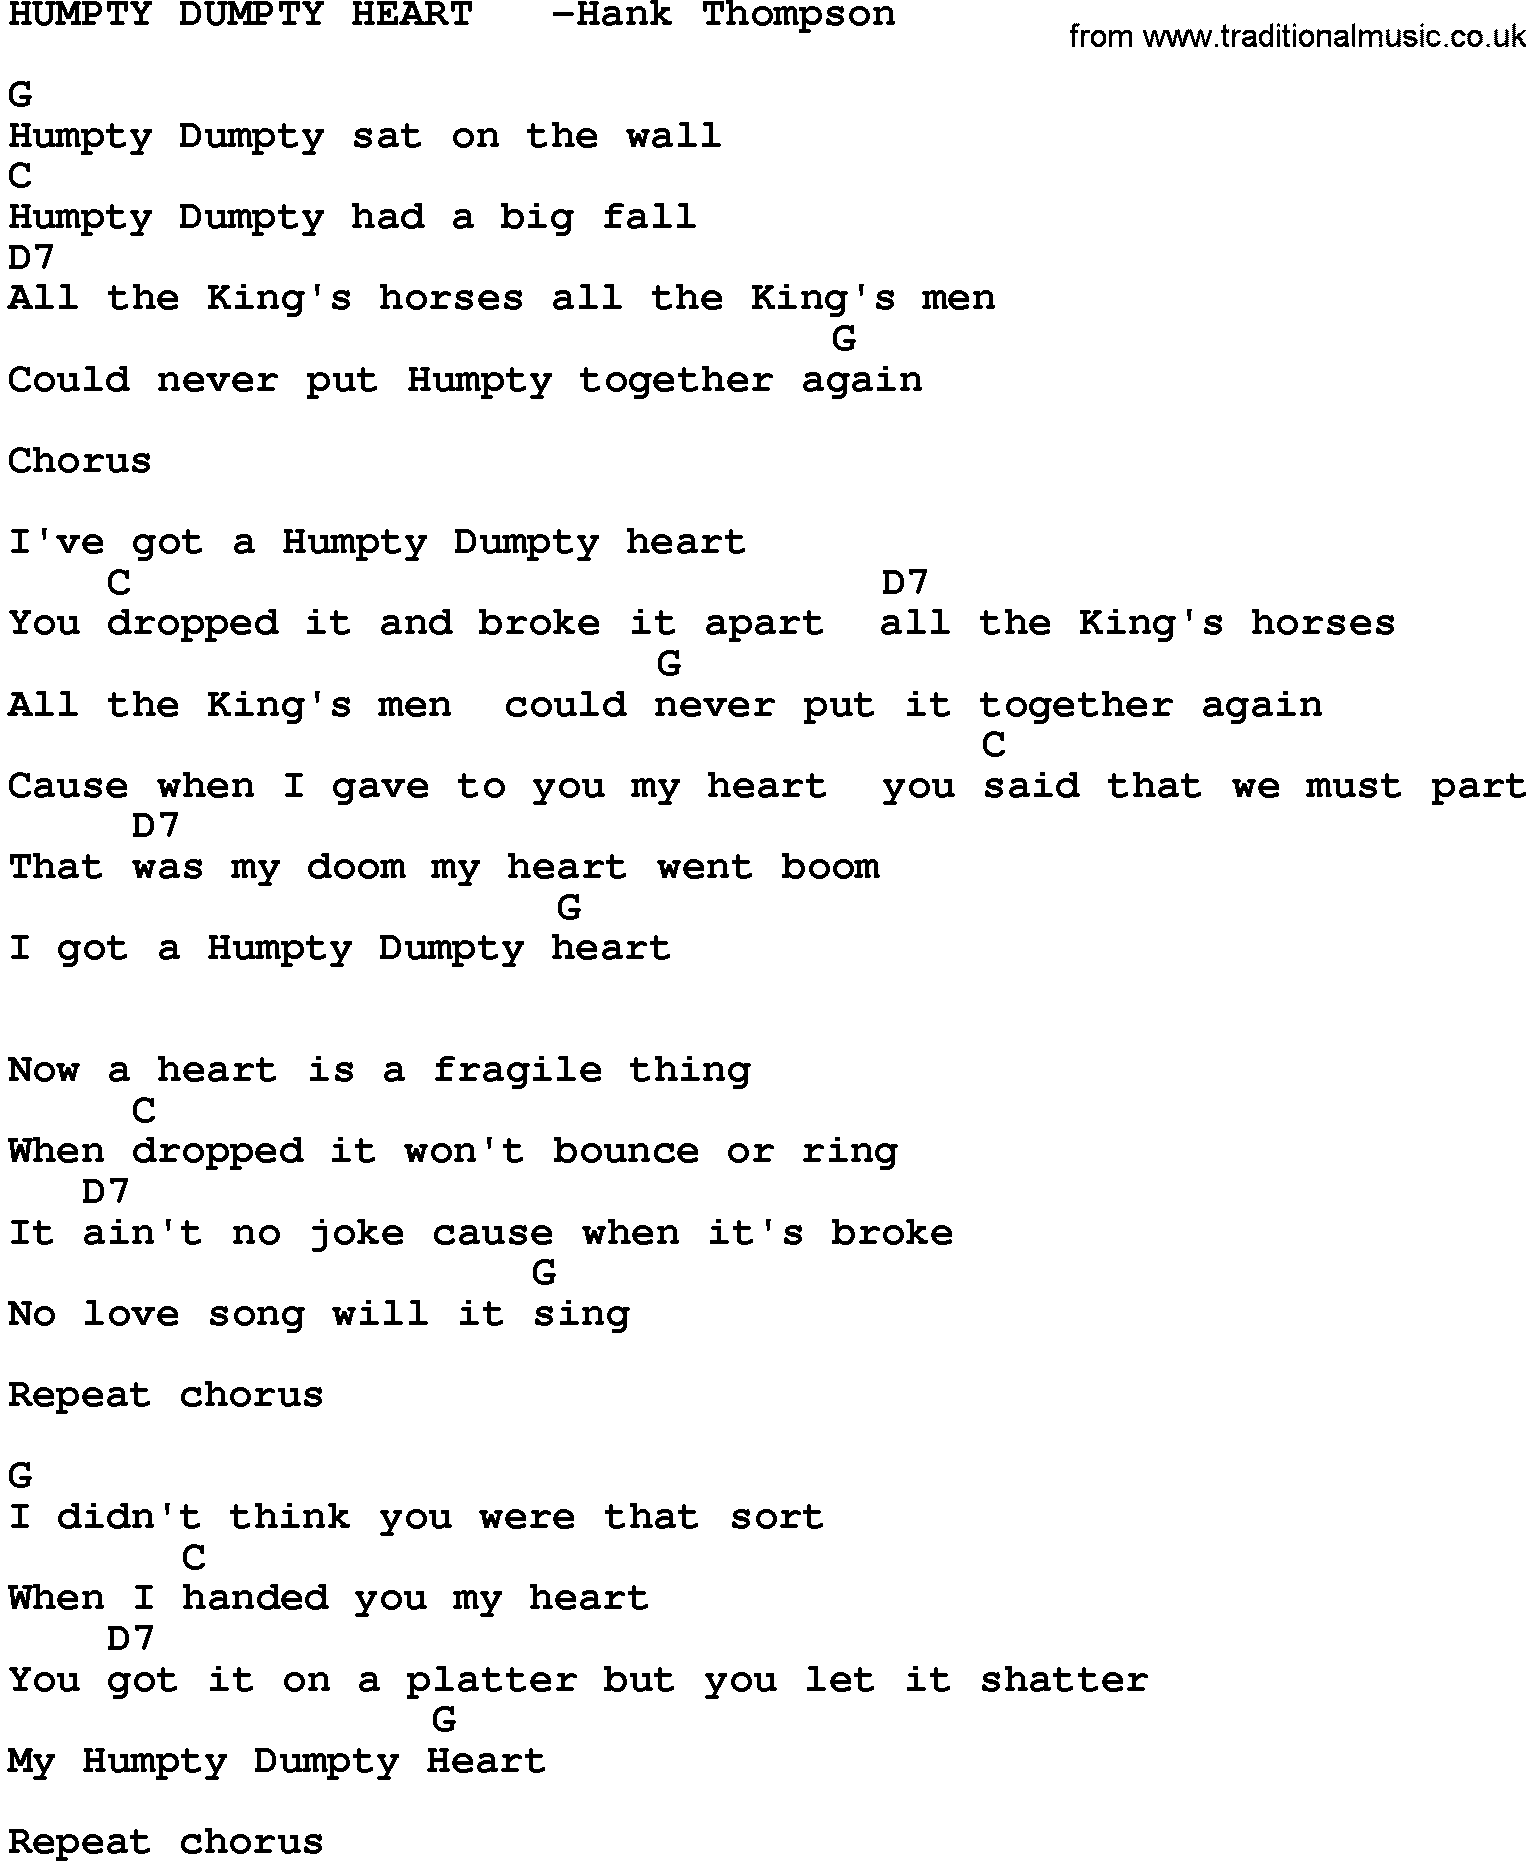 Country music song: Humpty Dumpty Heart -Hank Thompson lyrics and chords